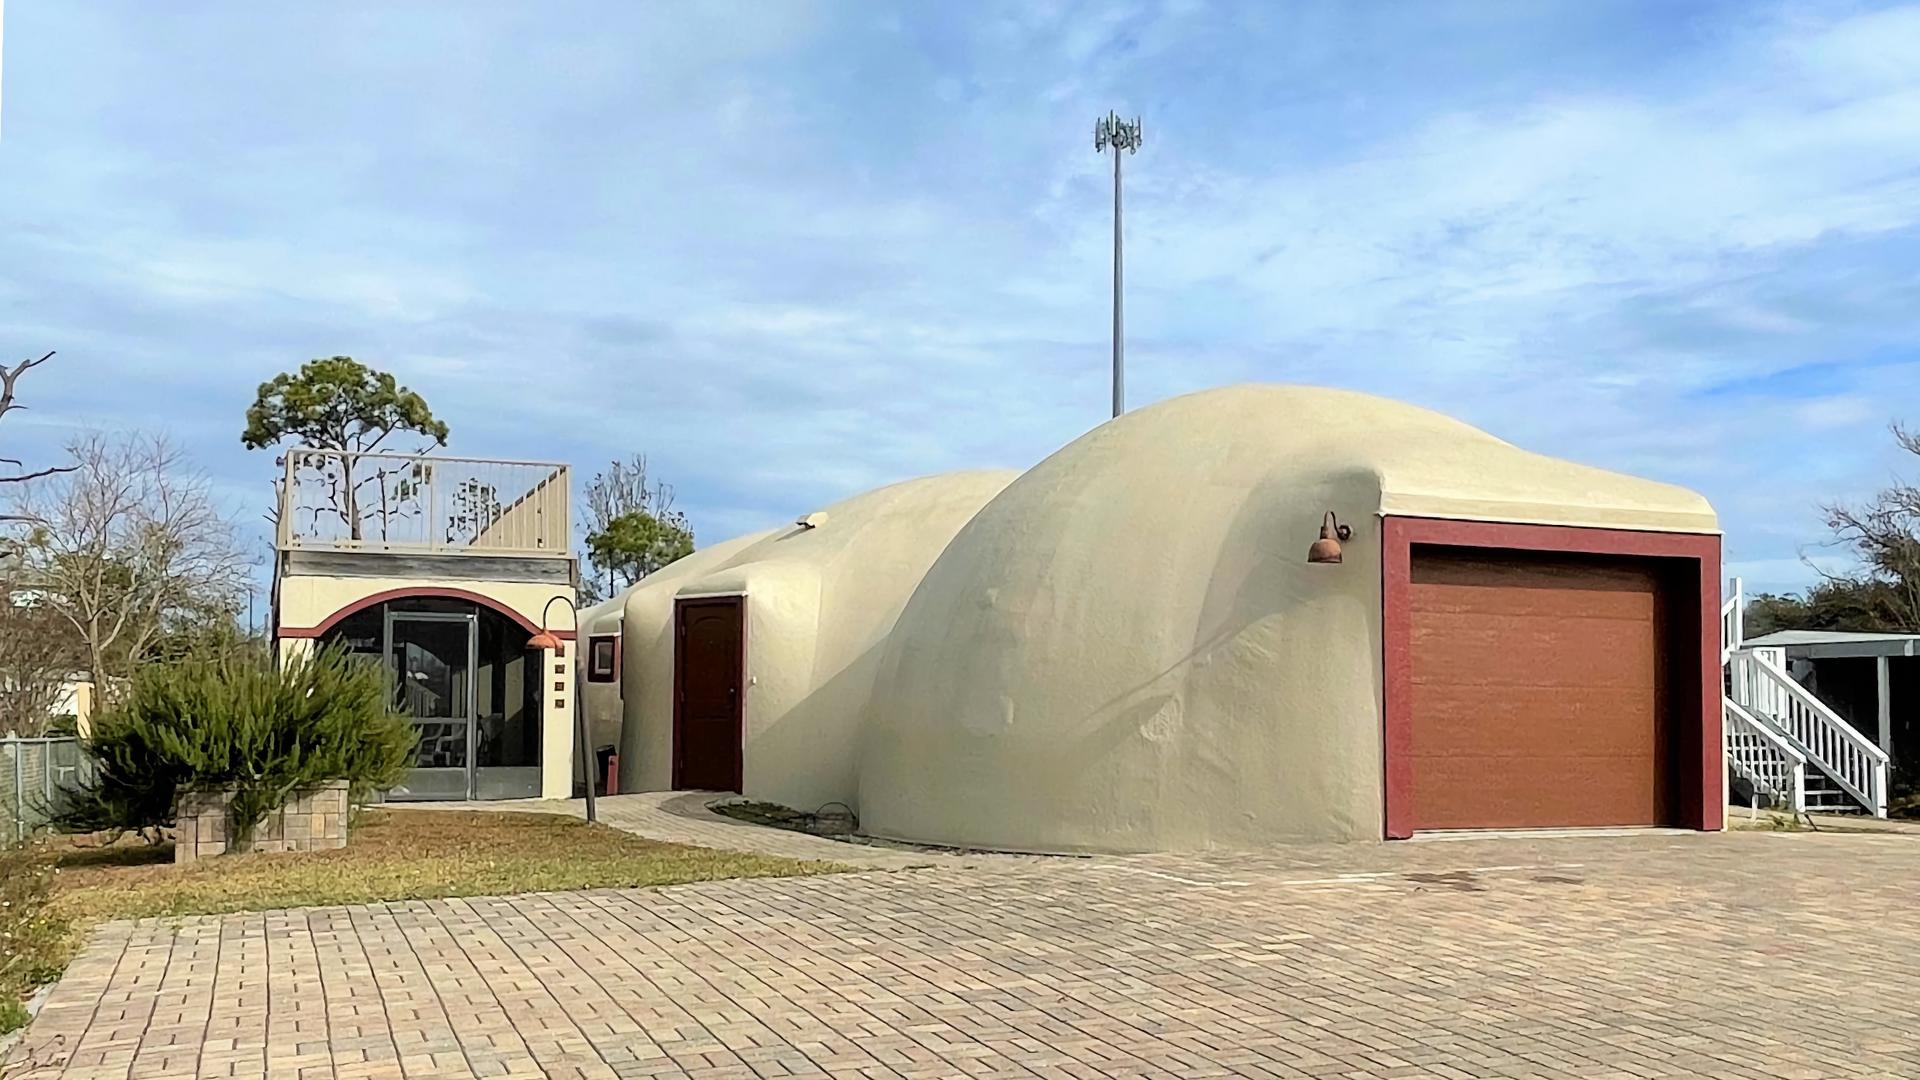 Caterpillar Shaped Golden Eye Dome Home.